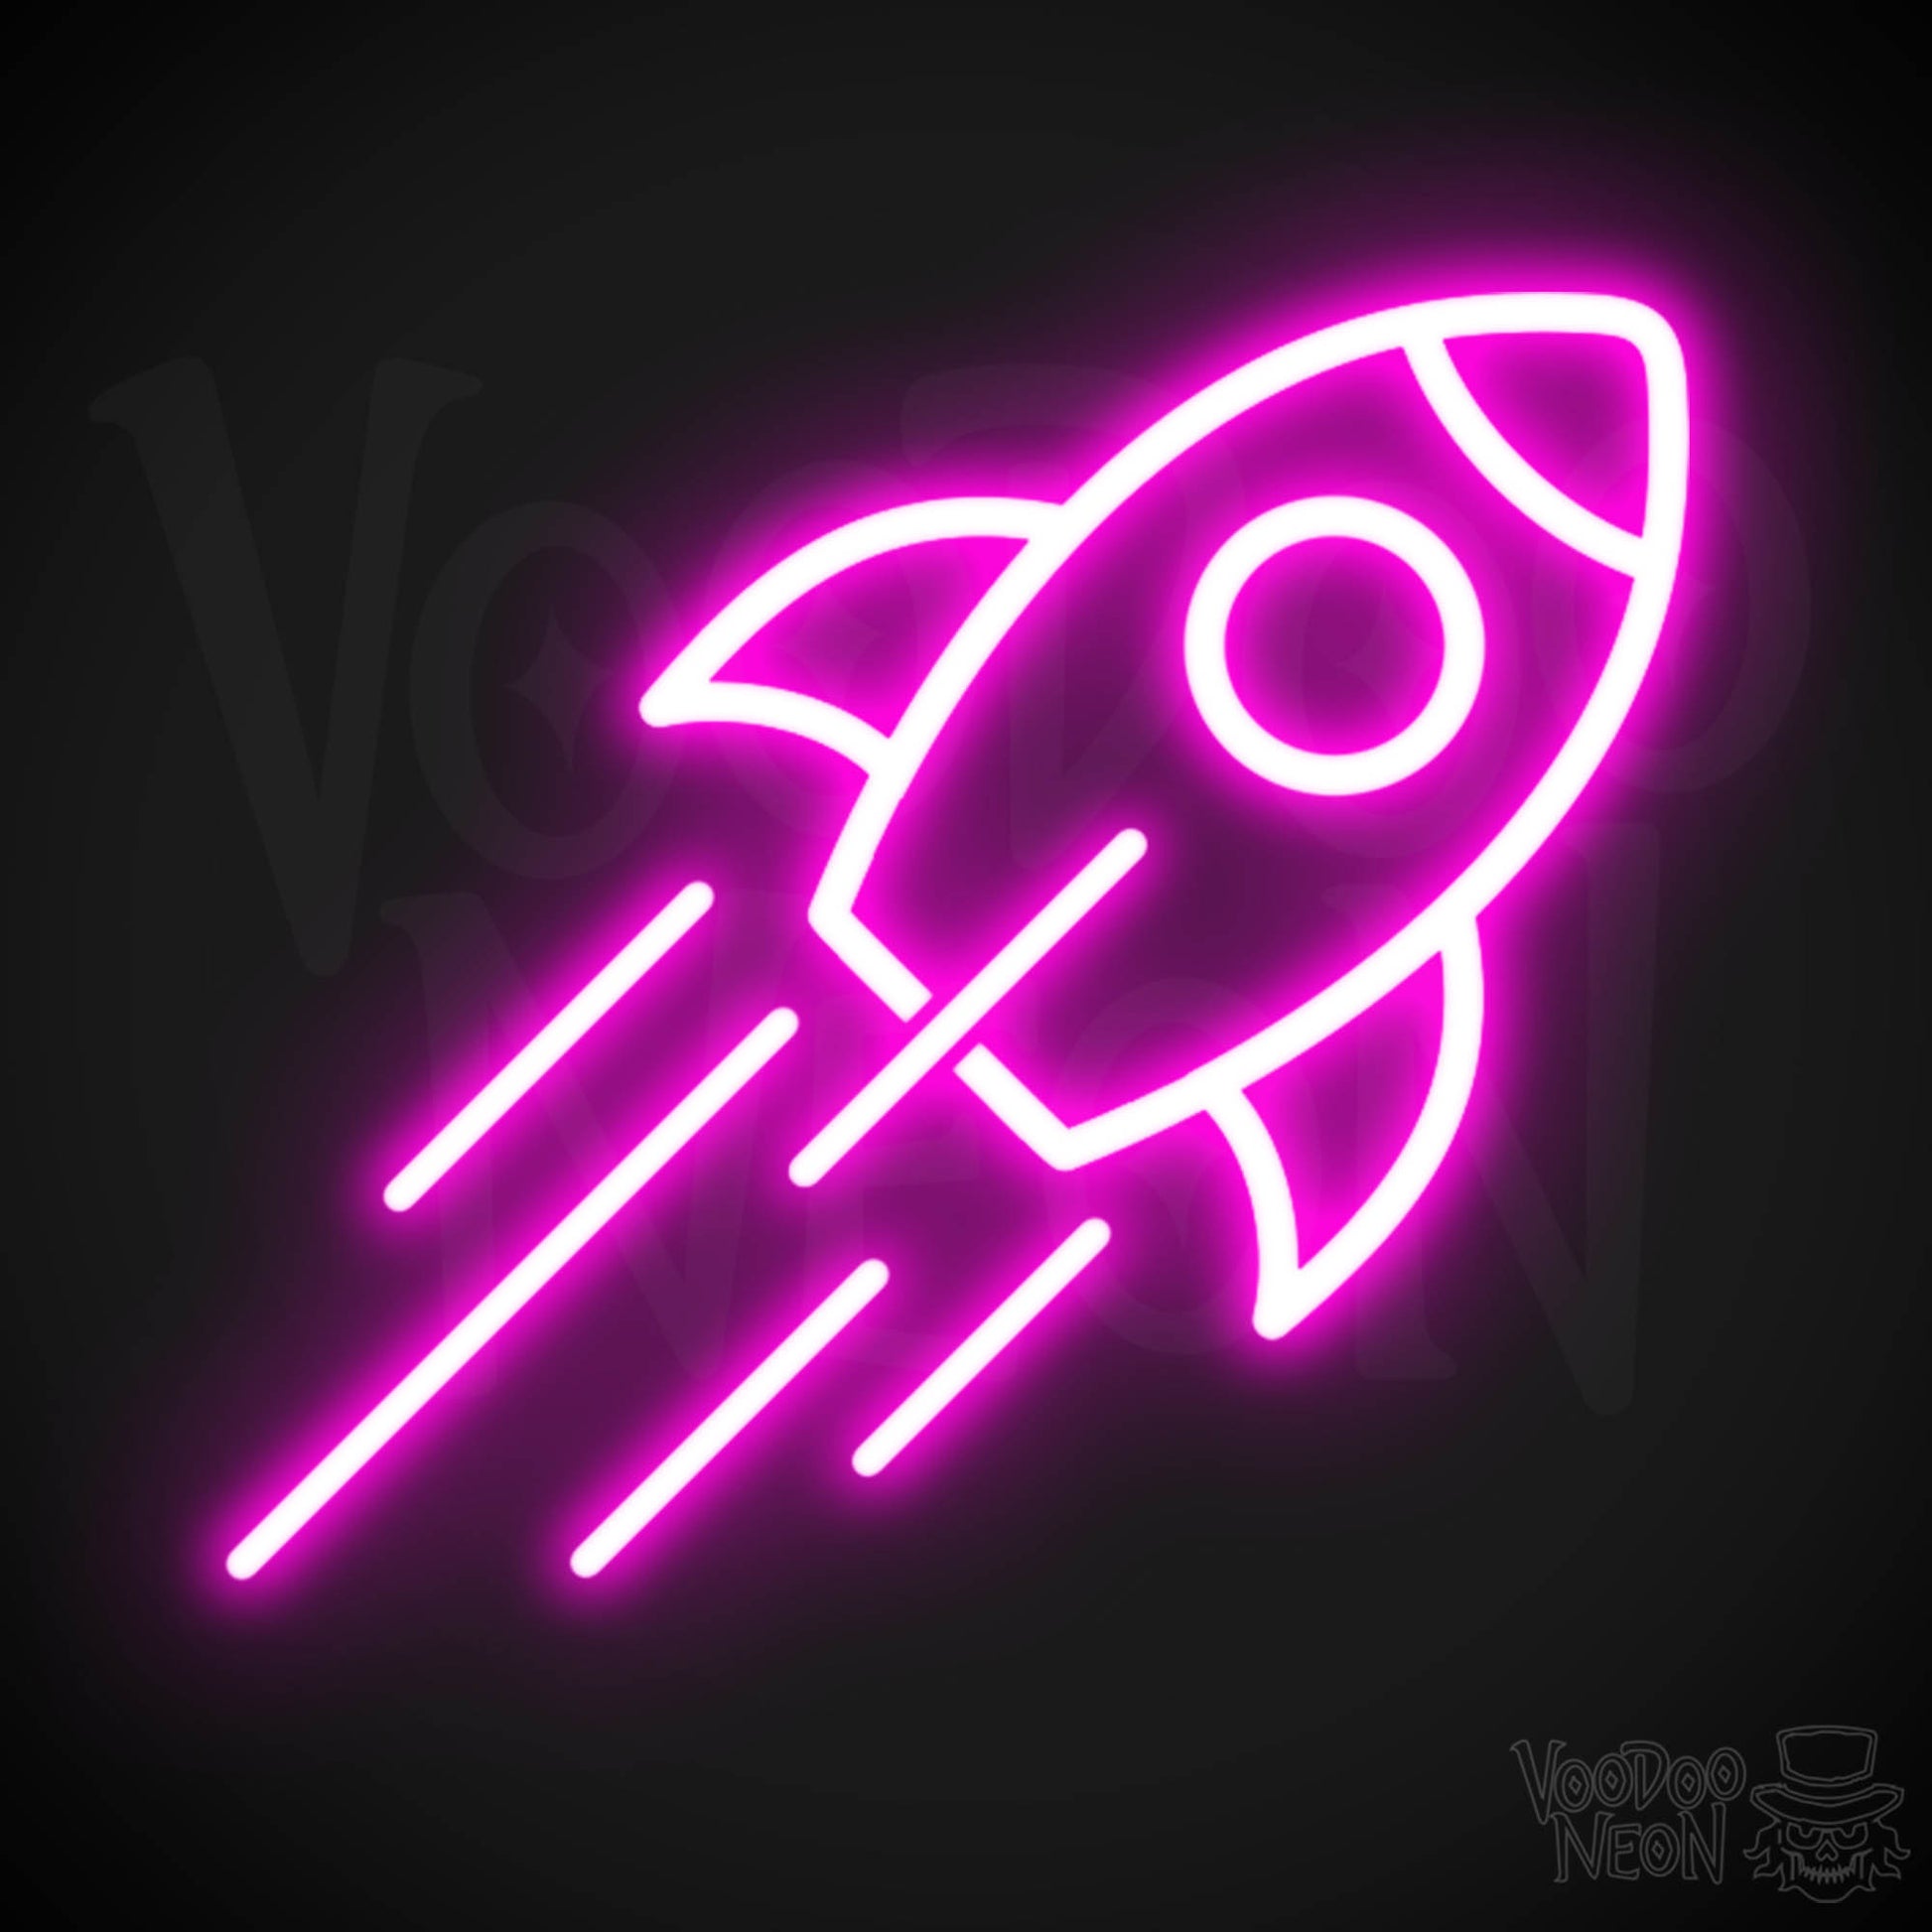 Neon Rocket - Rocket Neon Sign - Rocket Ship Neon Wall Art - Color Pink